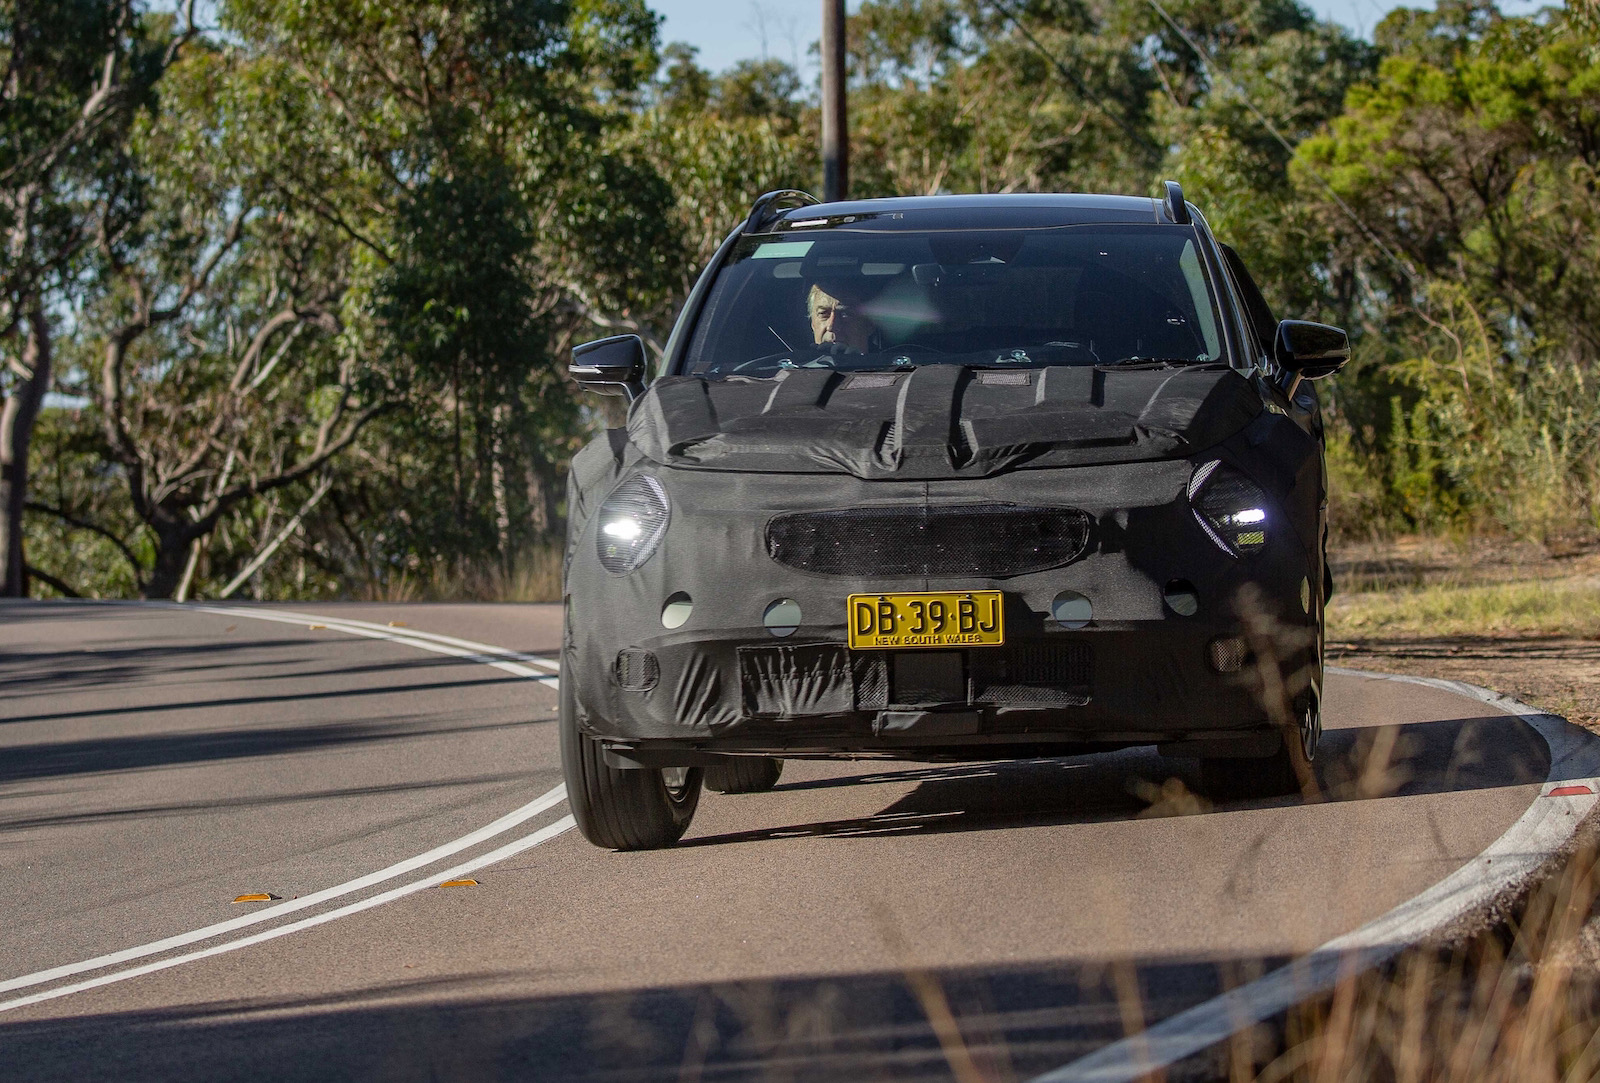 2022 Kia Sportage undergoing Australian tuning, 1.6 turbo confirmed